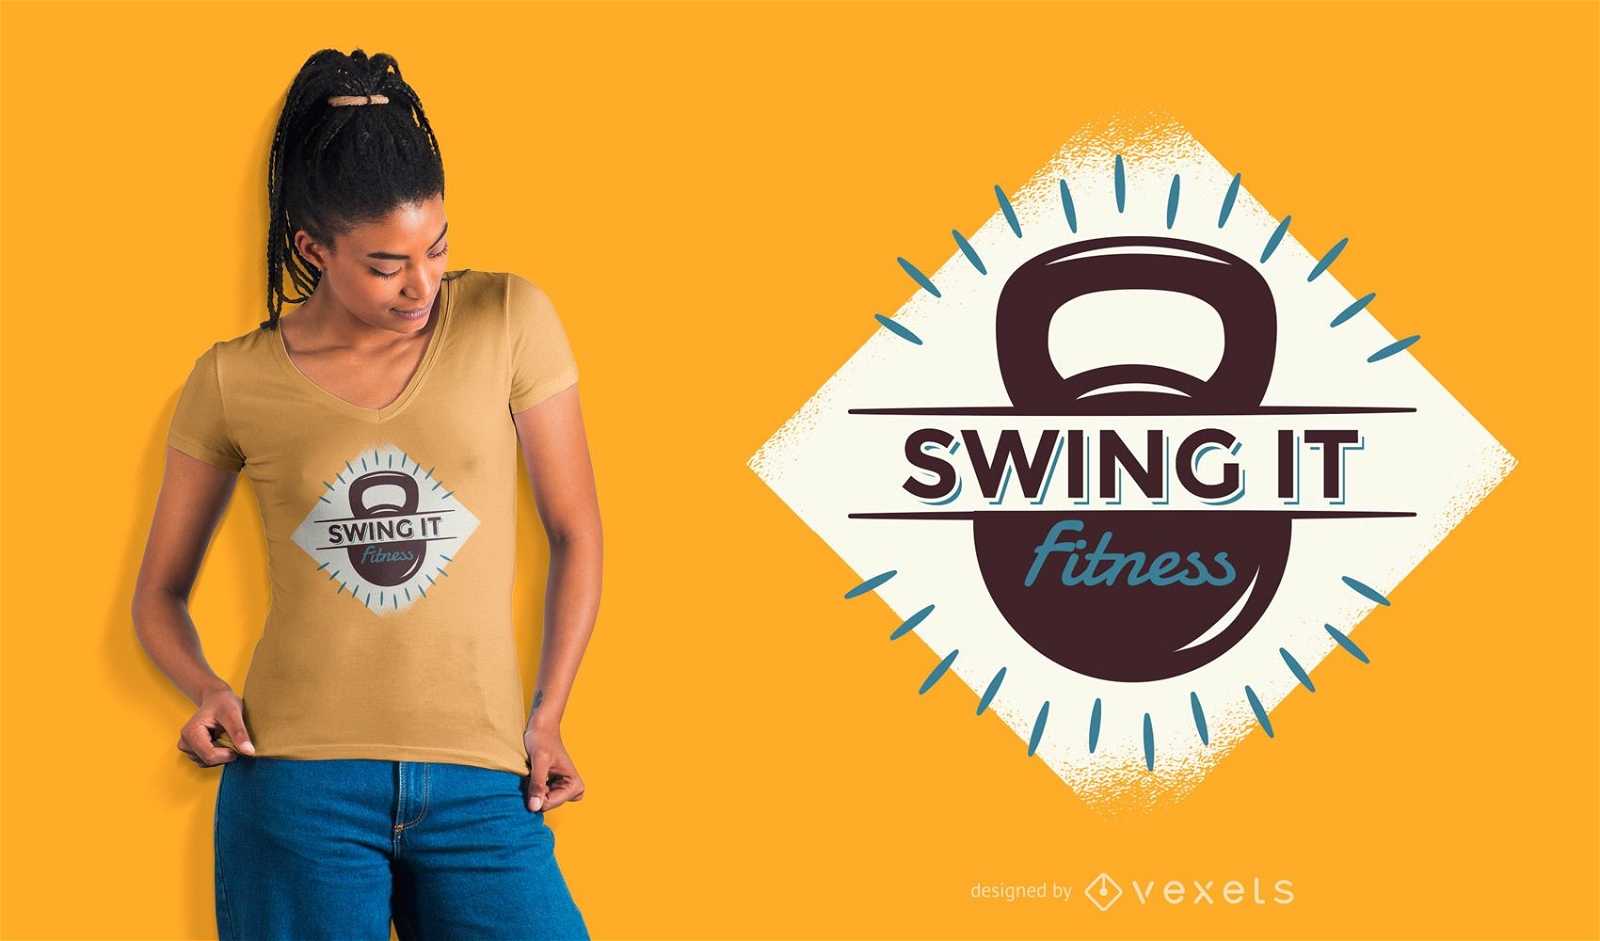 Swing it fitness t-shirt design